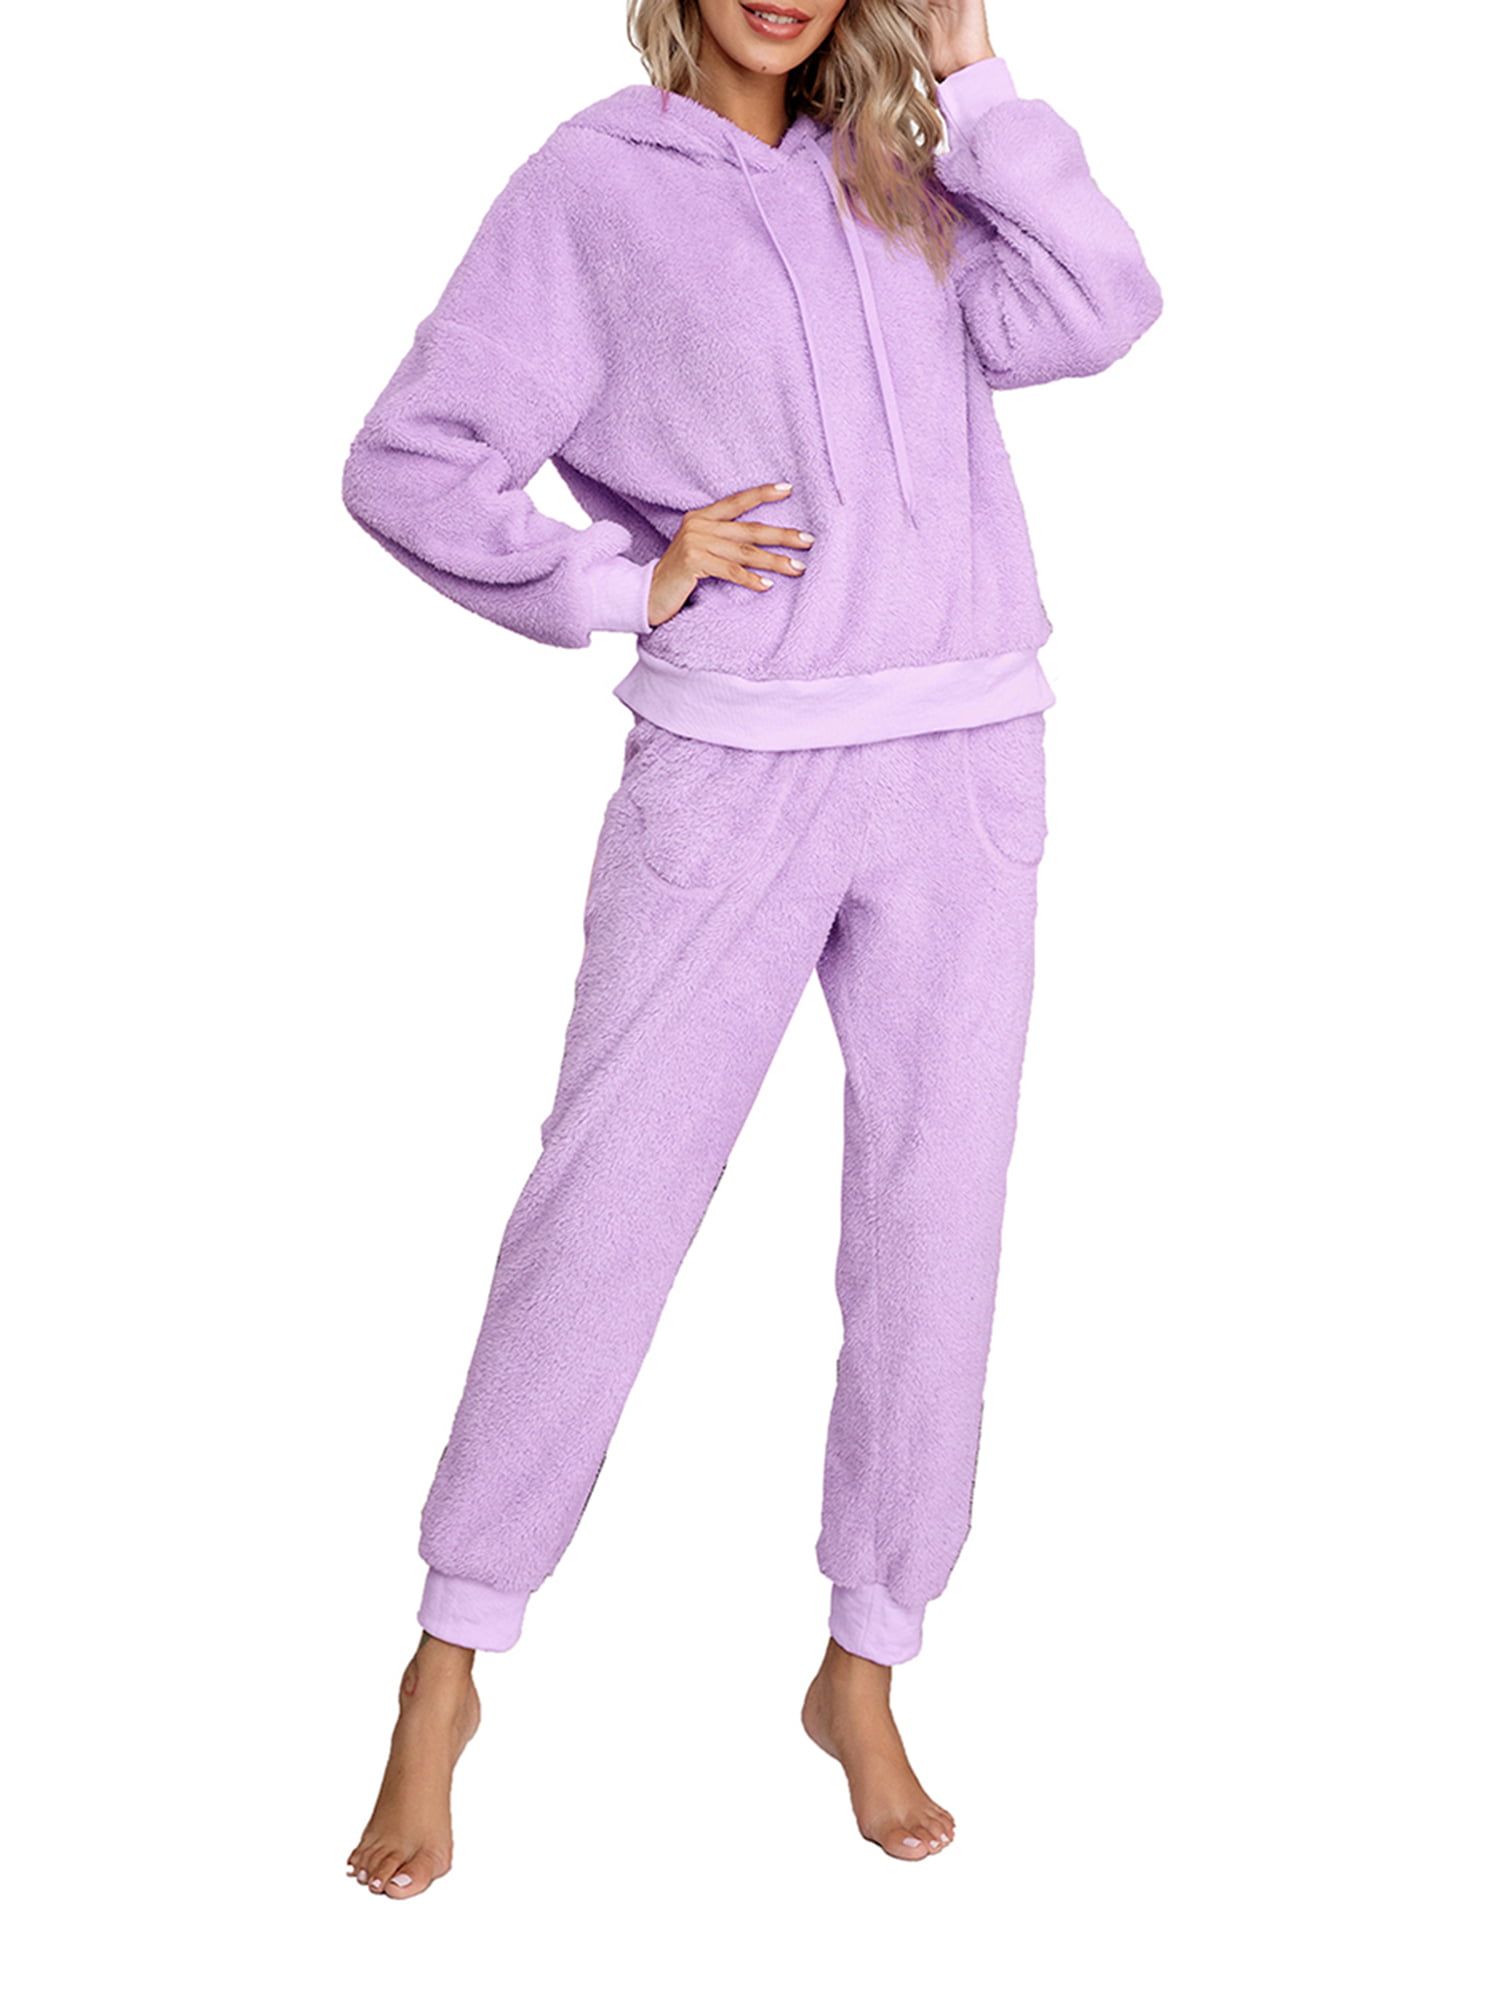 Pyjamas for Women Girls Ladies PJs Comfy Snuggle Warm Fleece Twosie Pajama Set Pyjama Flannel Shorts or Bottoms Set Lounge Wear for Women 